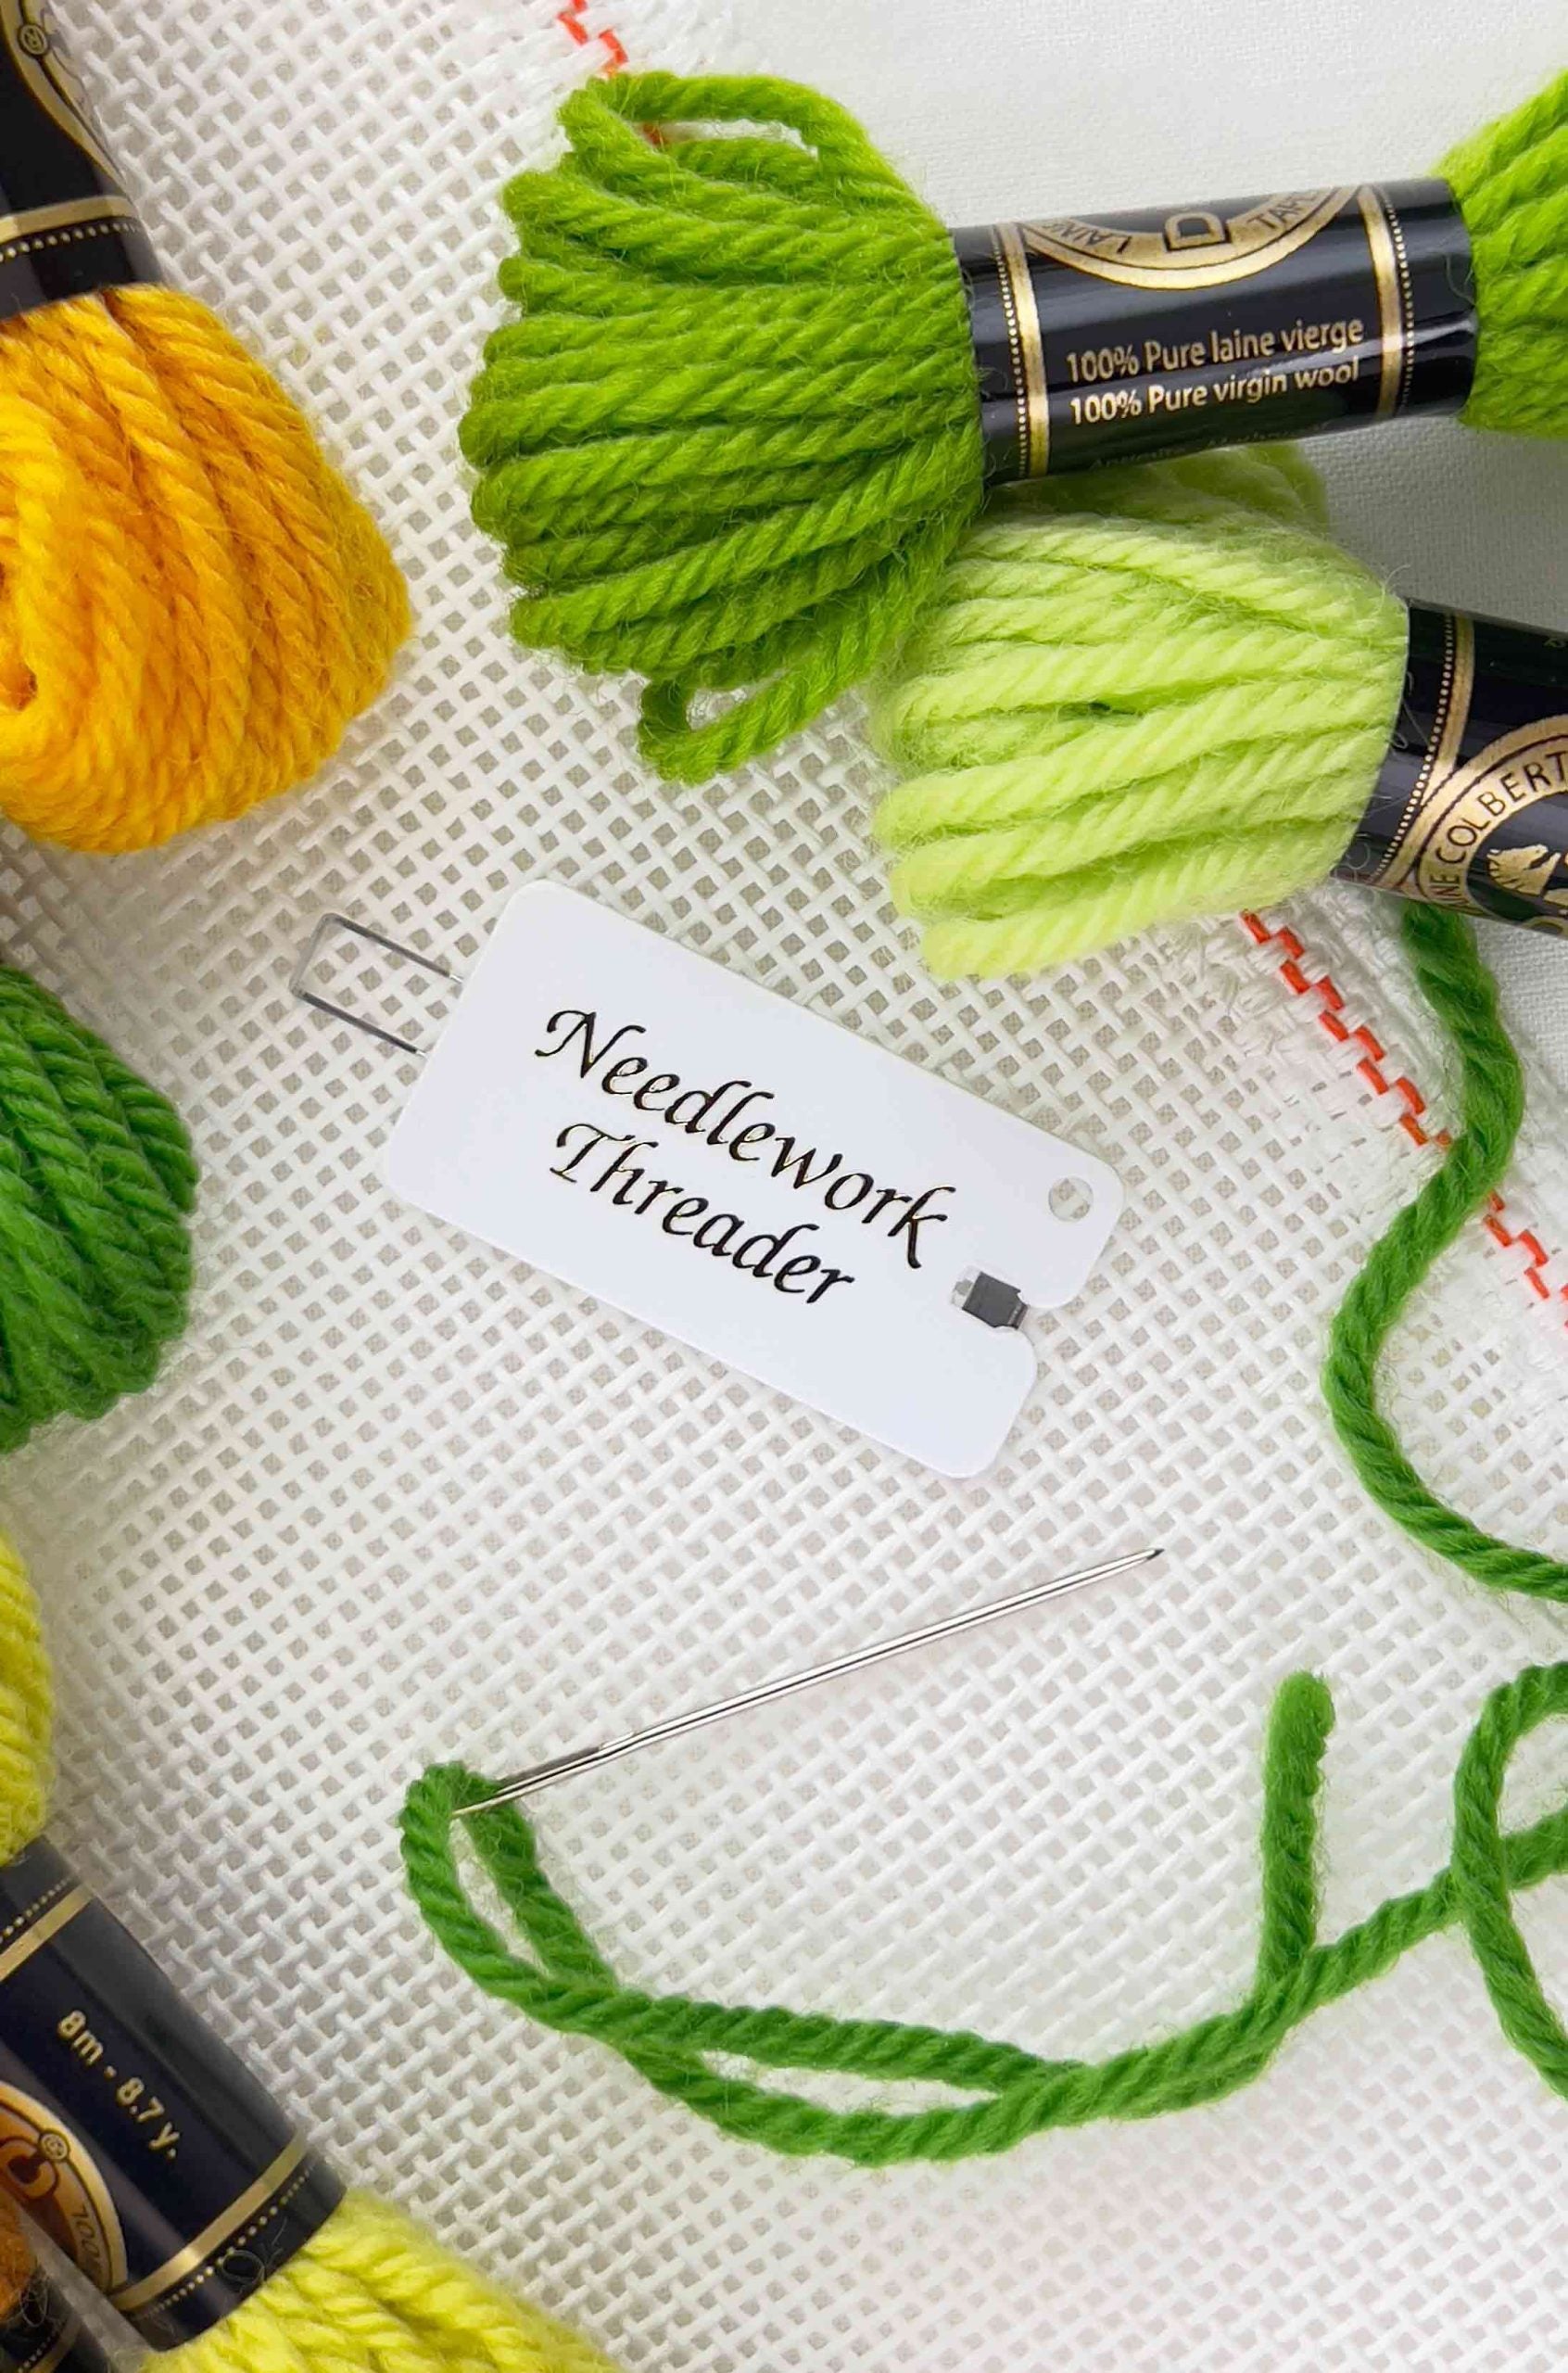 The Needlework Threader - Individual